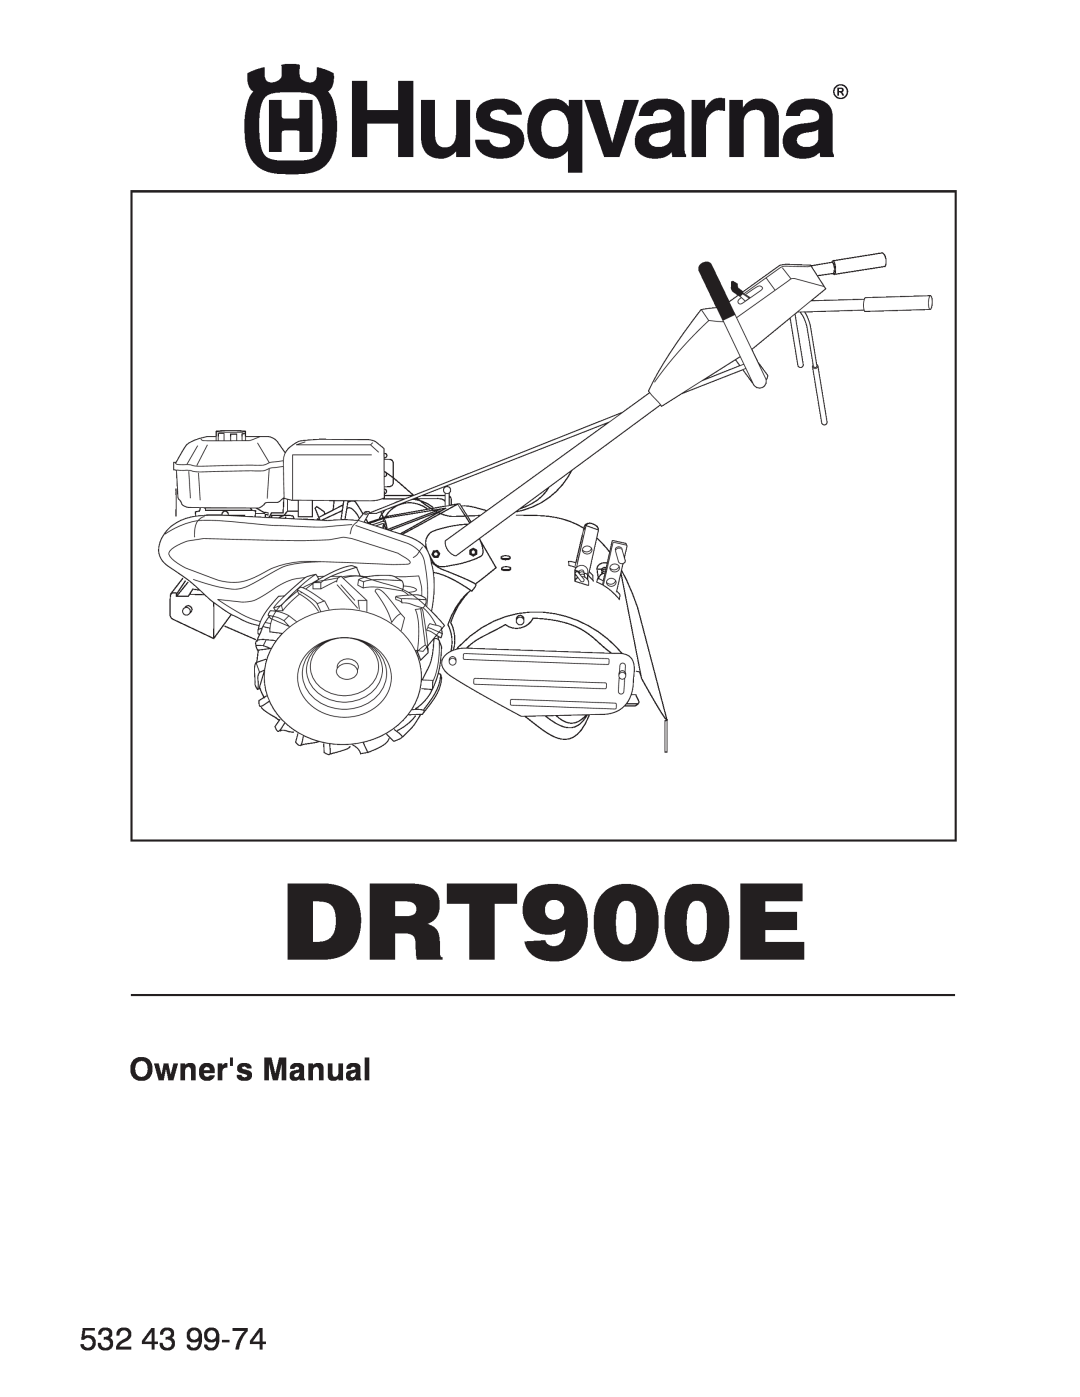 Husqvarna DRT900E owner manual 532 